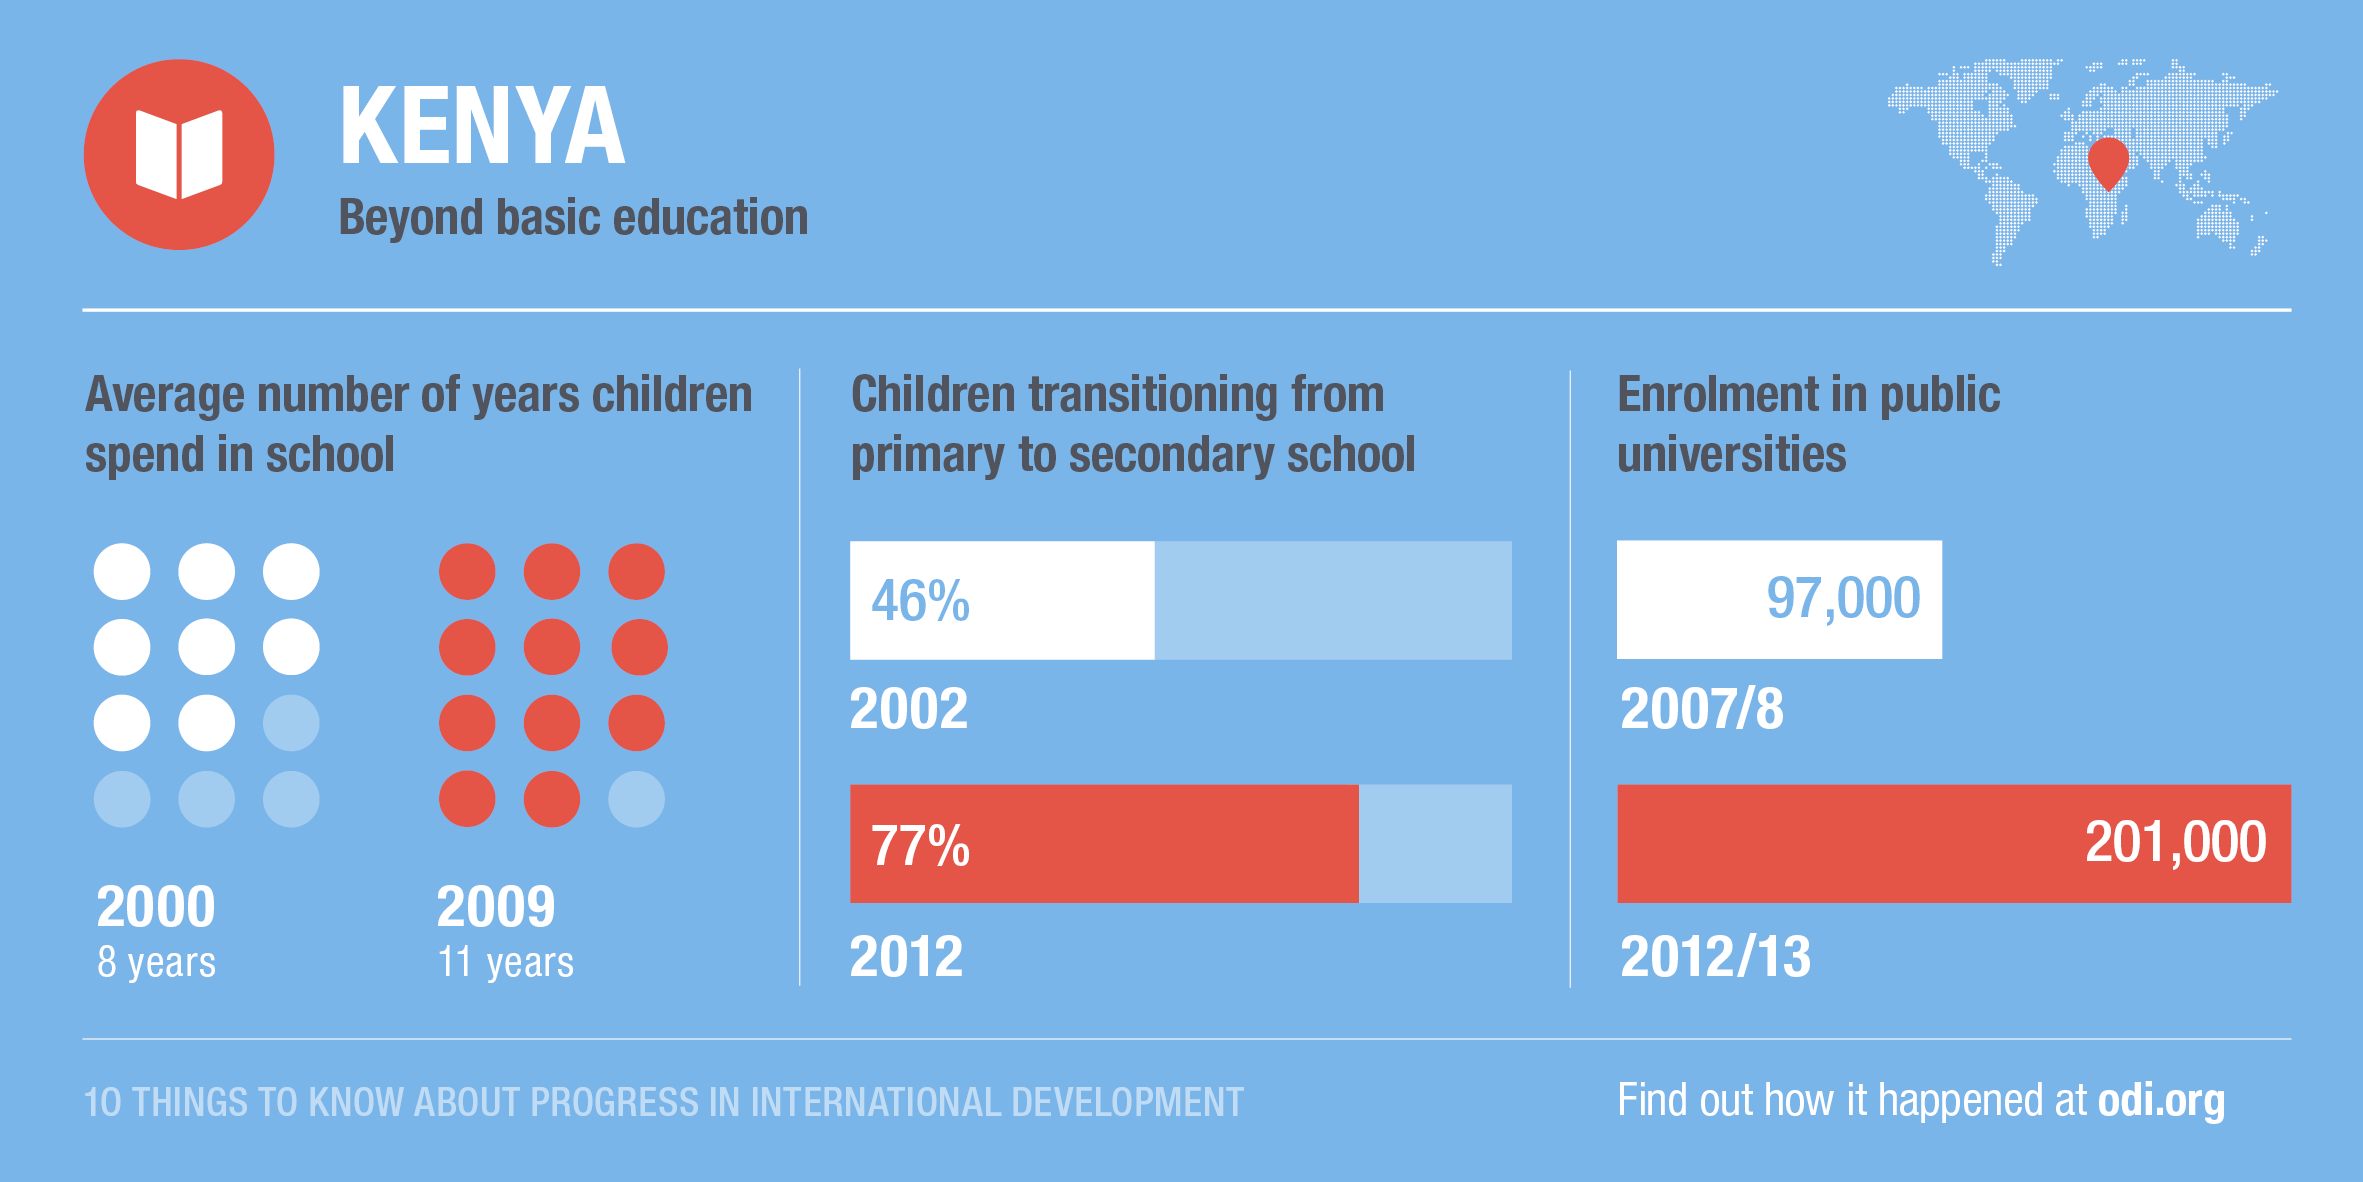 Kenya's progress on education